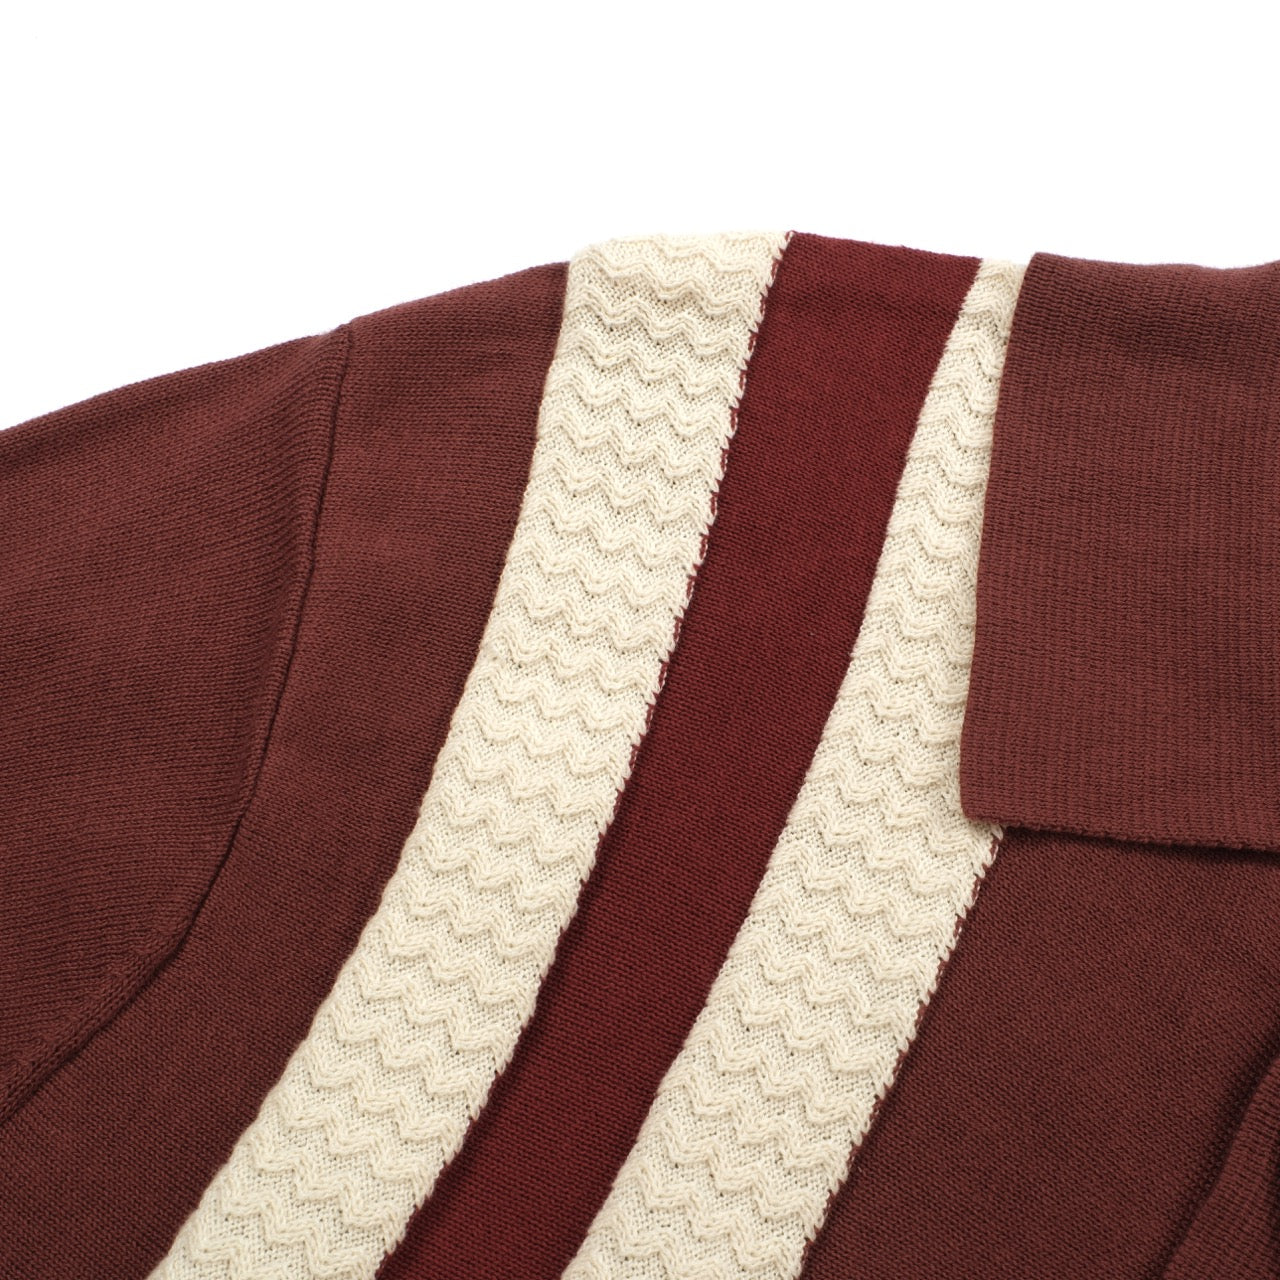 OXKNIT Men Vintage Clothing 1960s Mod Style Casual Stripe Knit Dark Brown Retro Polo